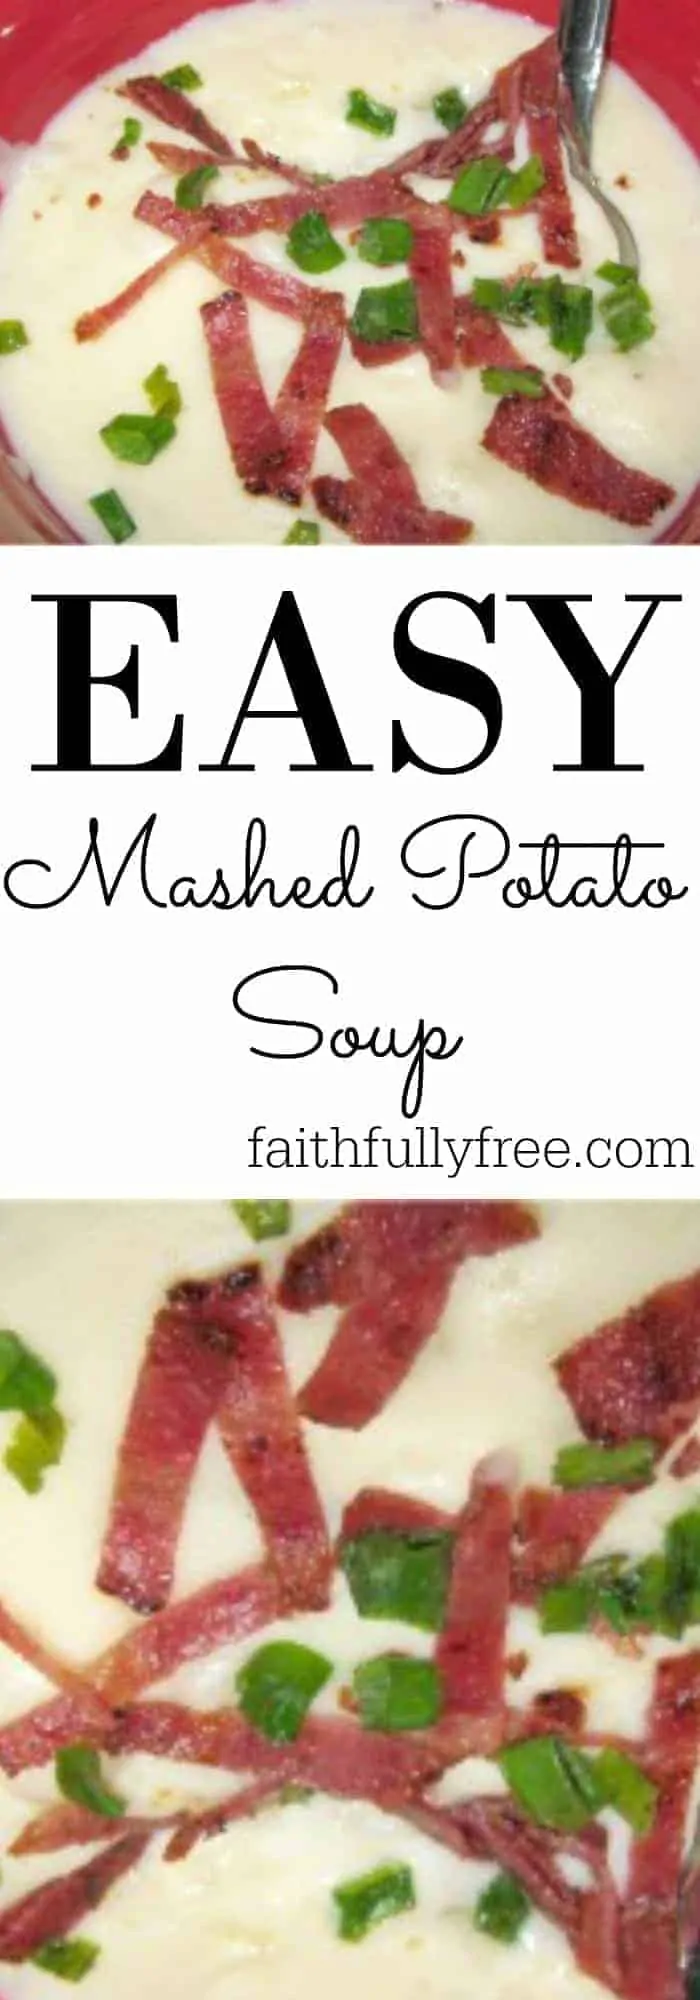 Easy Mashed Potato Soup